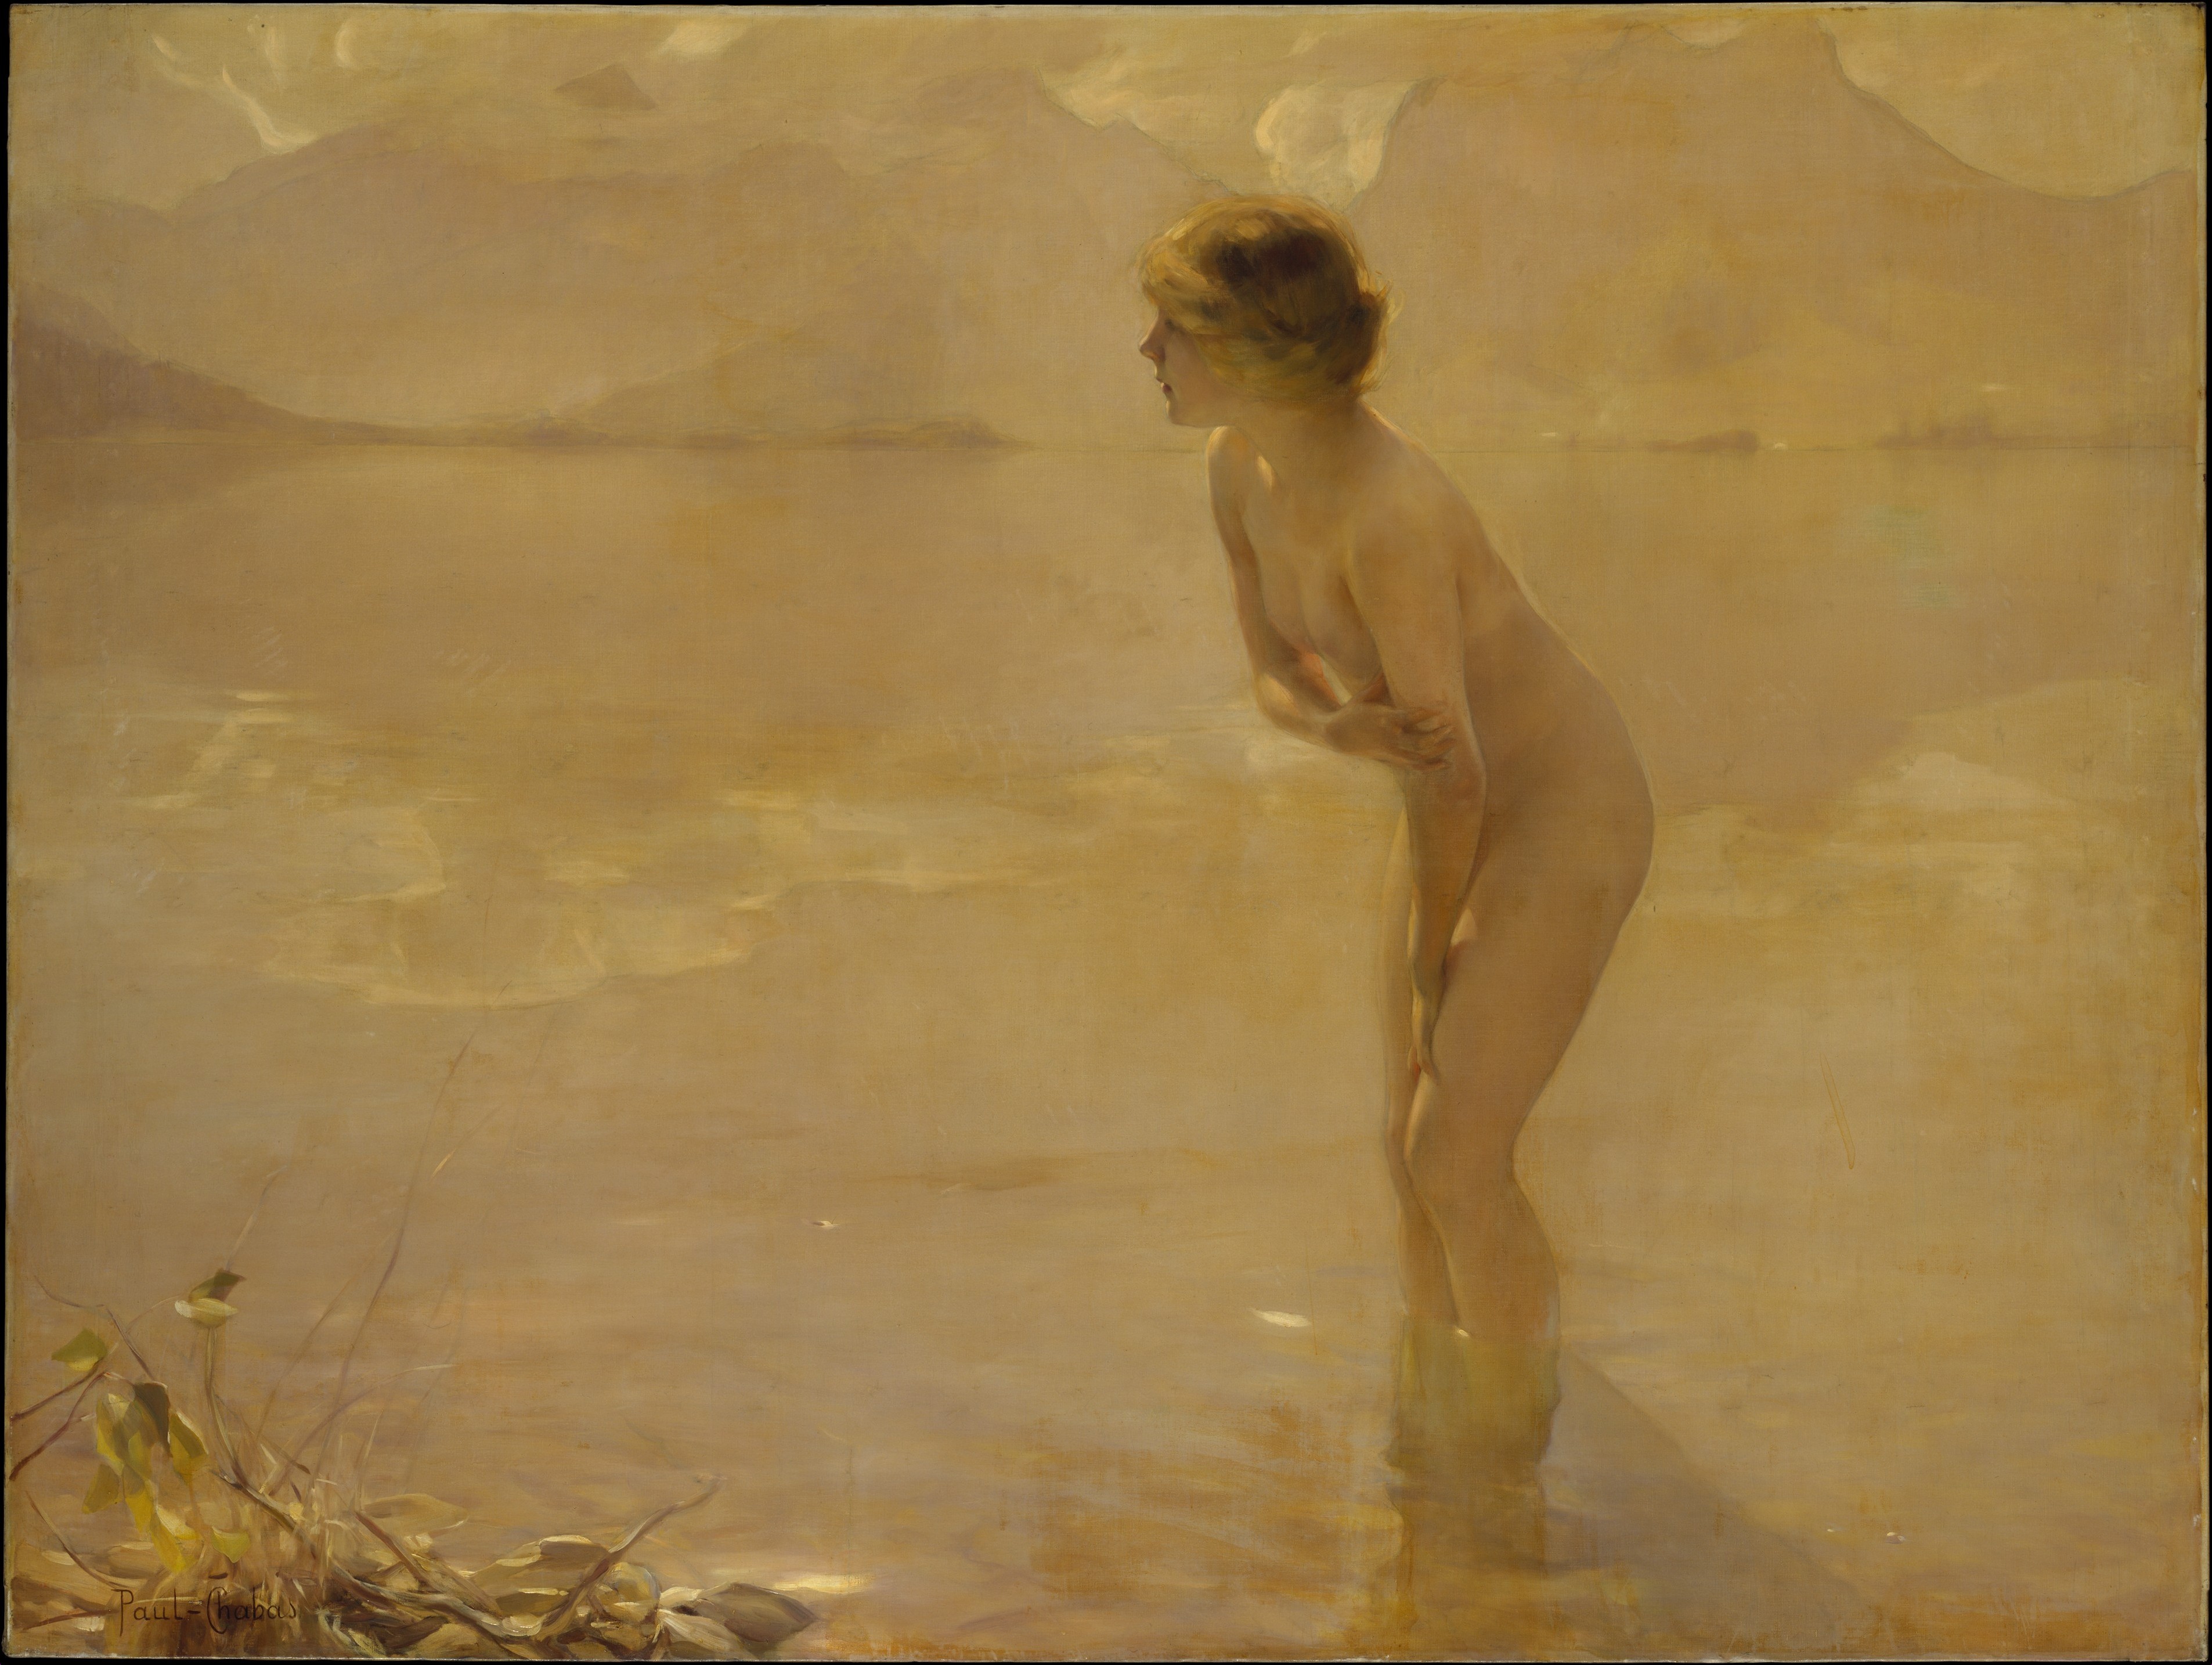 Septembermorgen by Paul Chabas - 1910-1912 - 163.8 x 216.5 cm Metropolitan Museum of Art